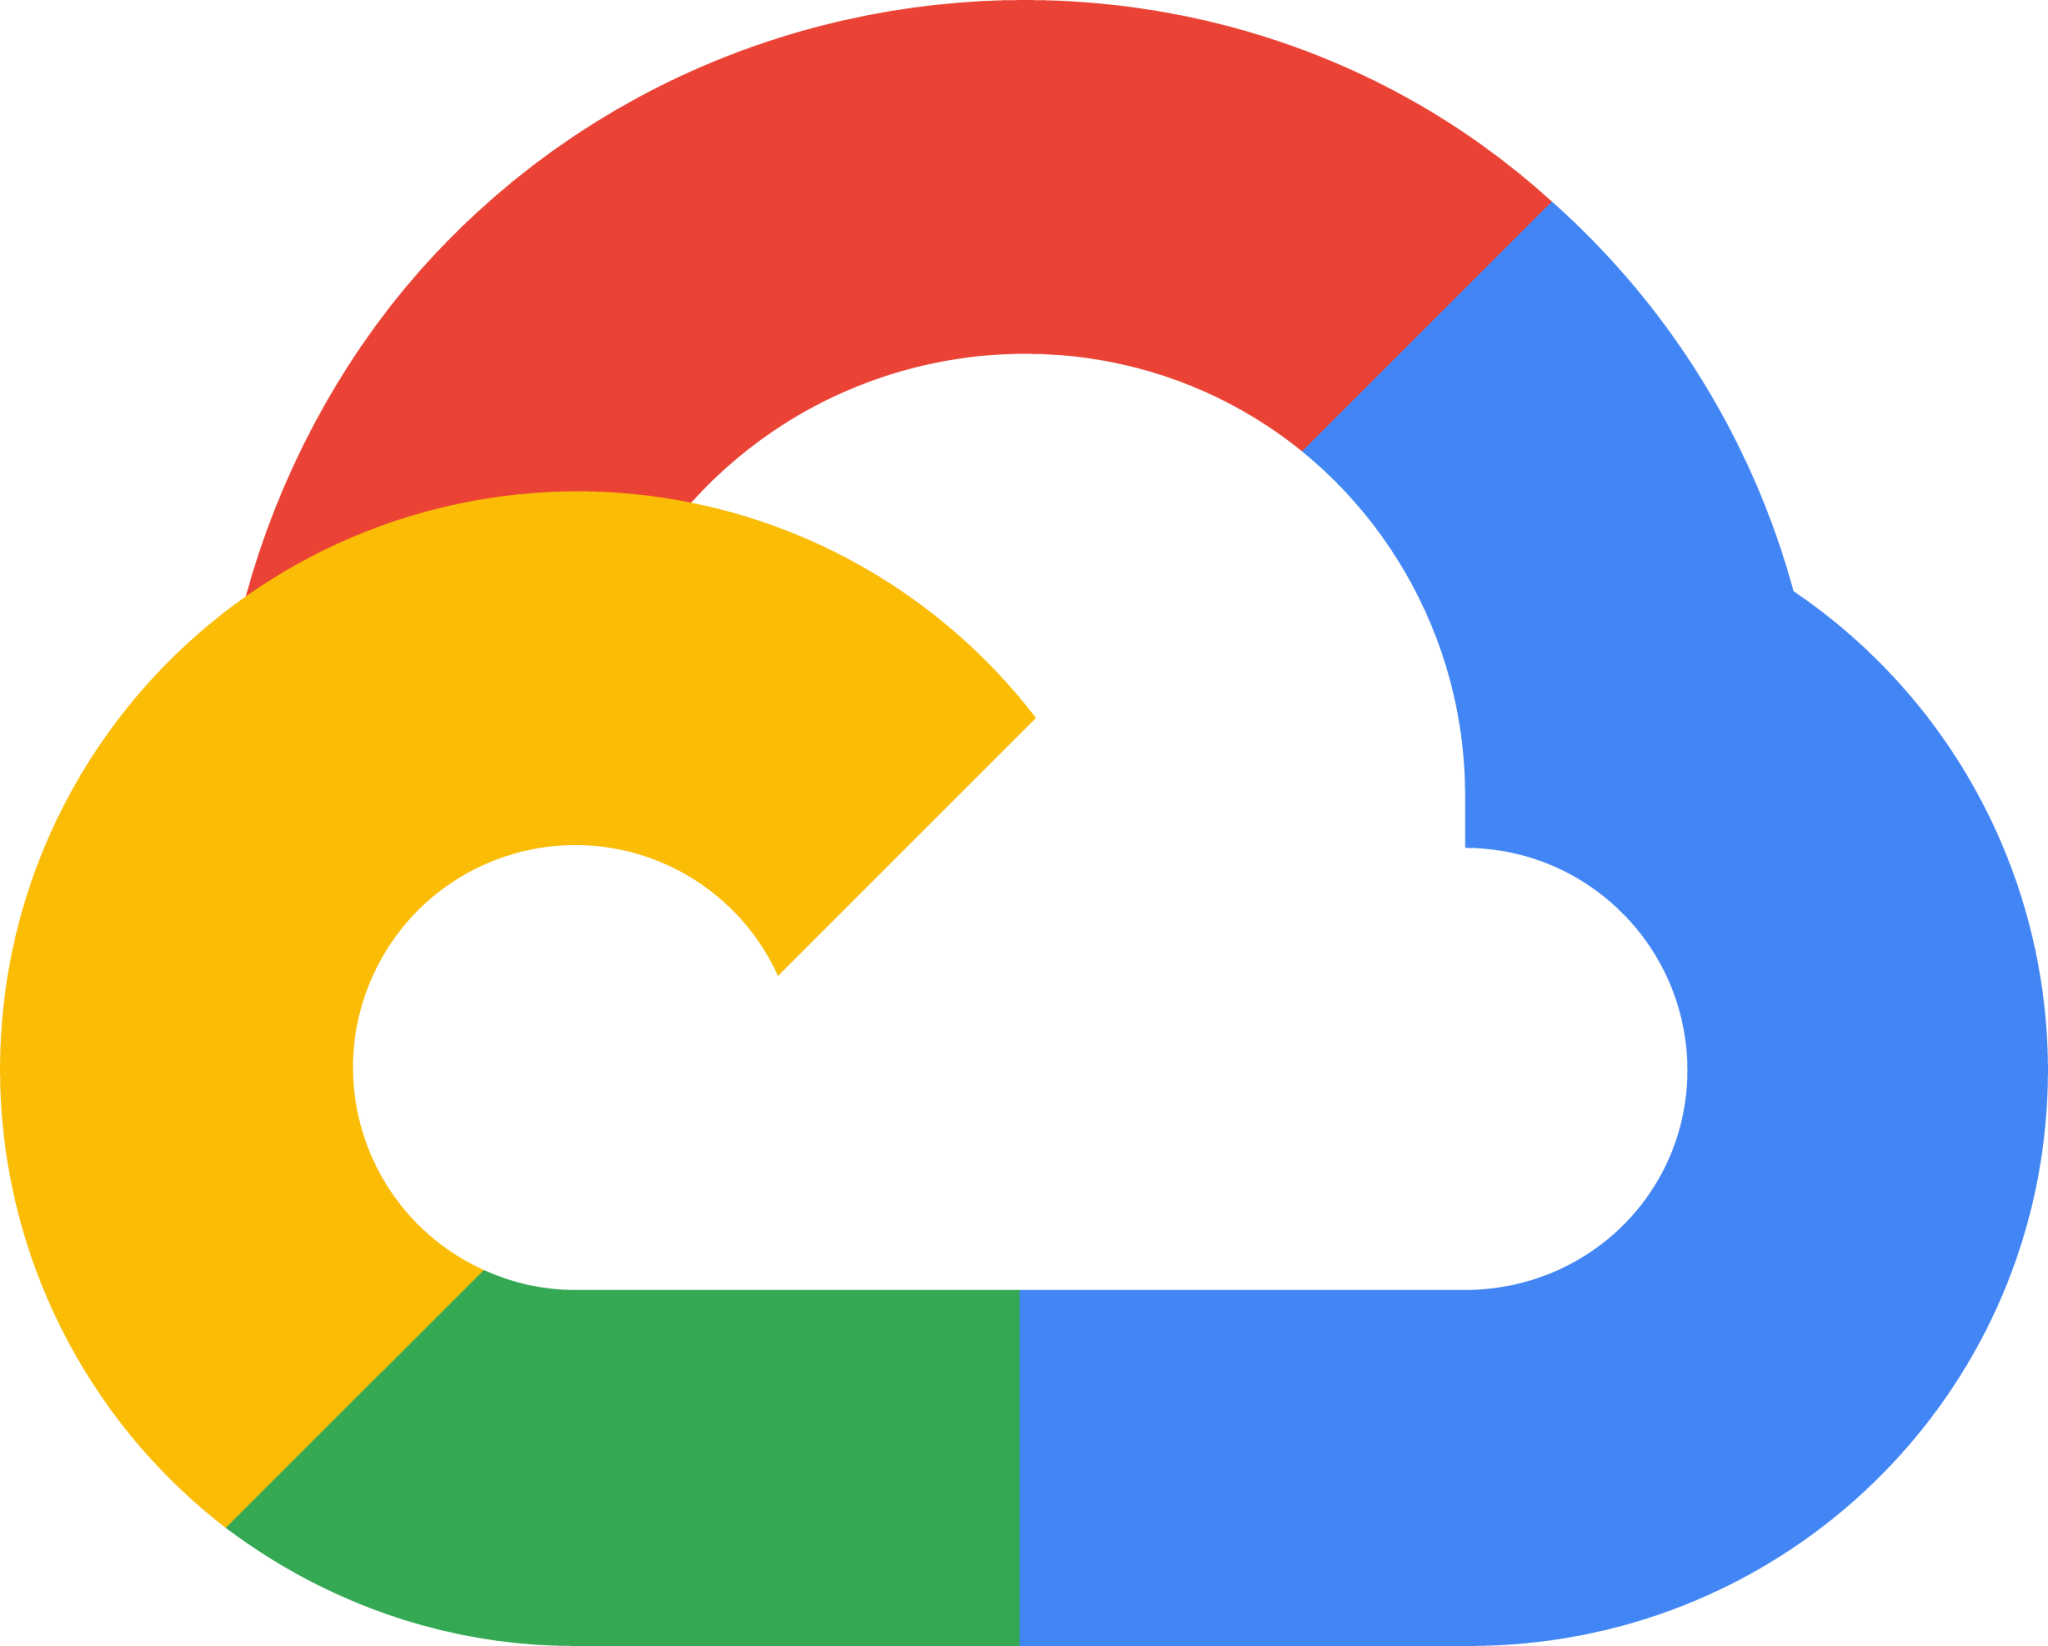 Google Cloud logs logo